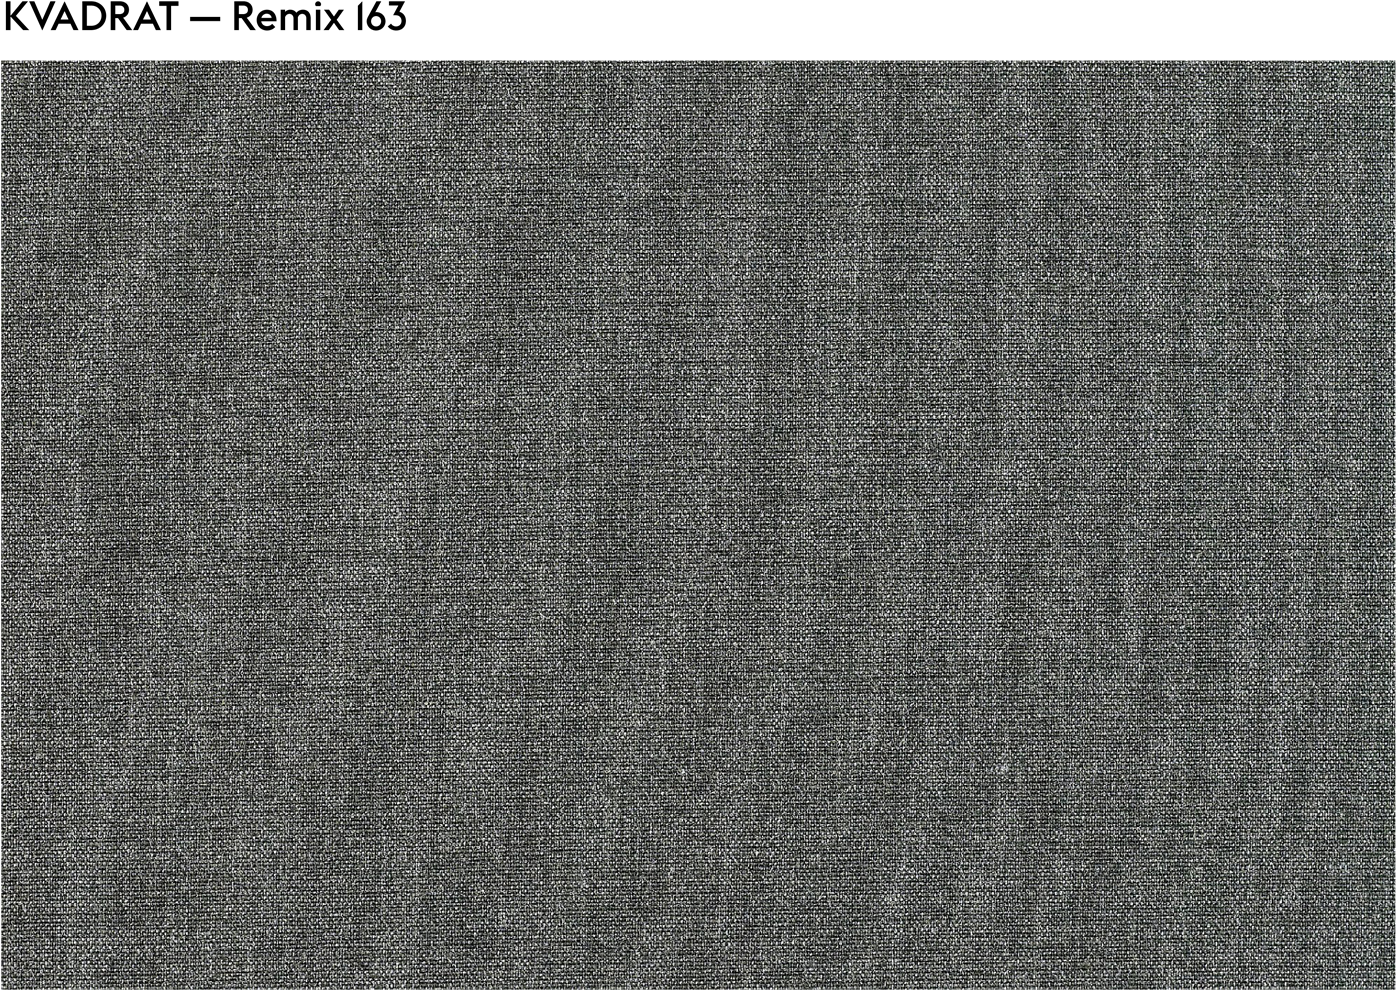 A Close-up Of A Grey Fabric